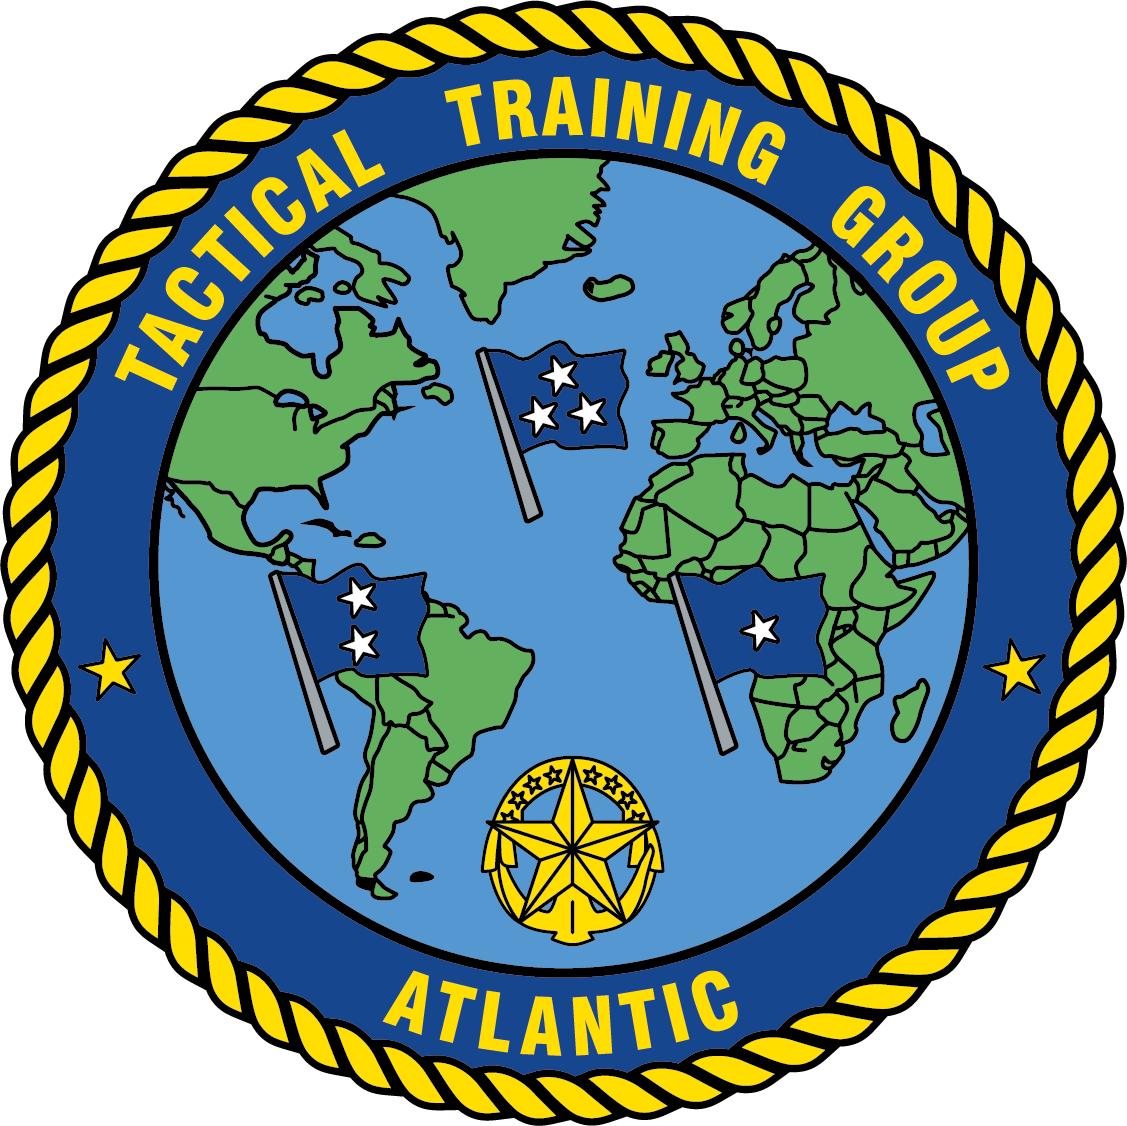 Tactical Training Grp Atlantic - Tactical Training Group, Atlantic (1127x1126)